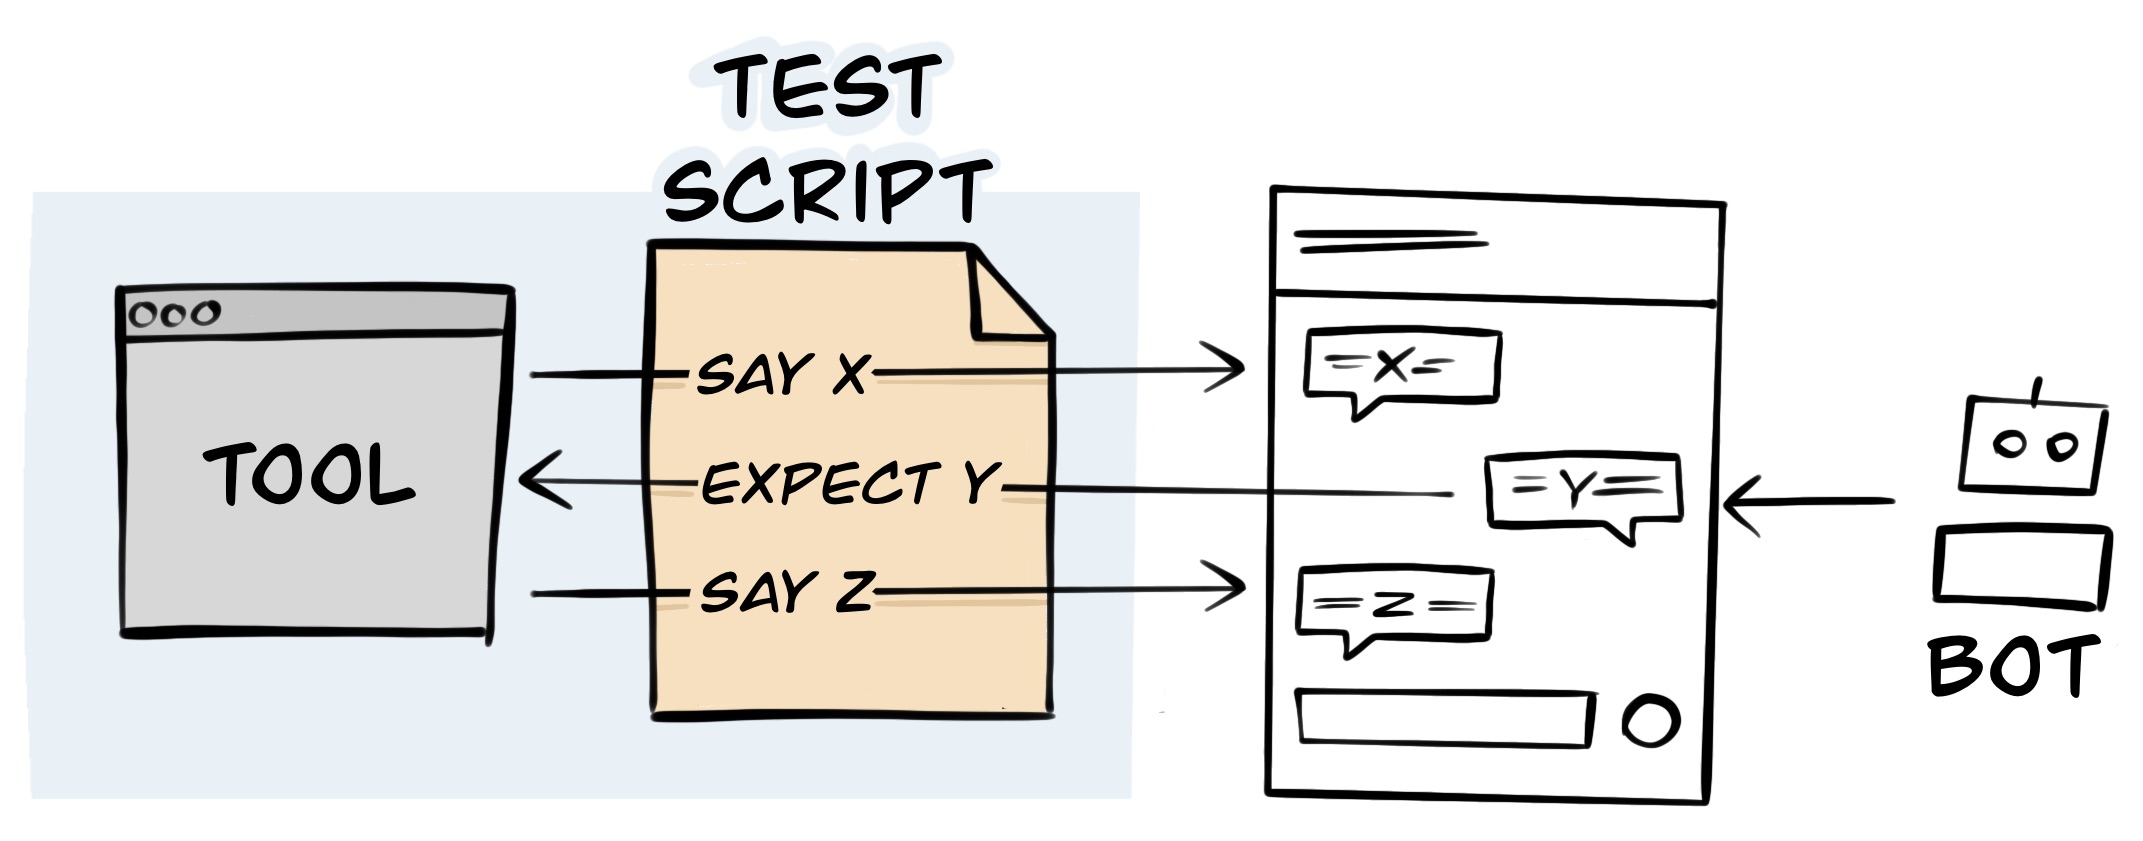 Tool using test-script file to test Web Messenger Deployment